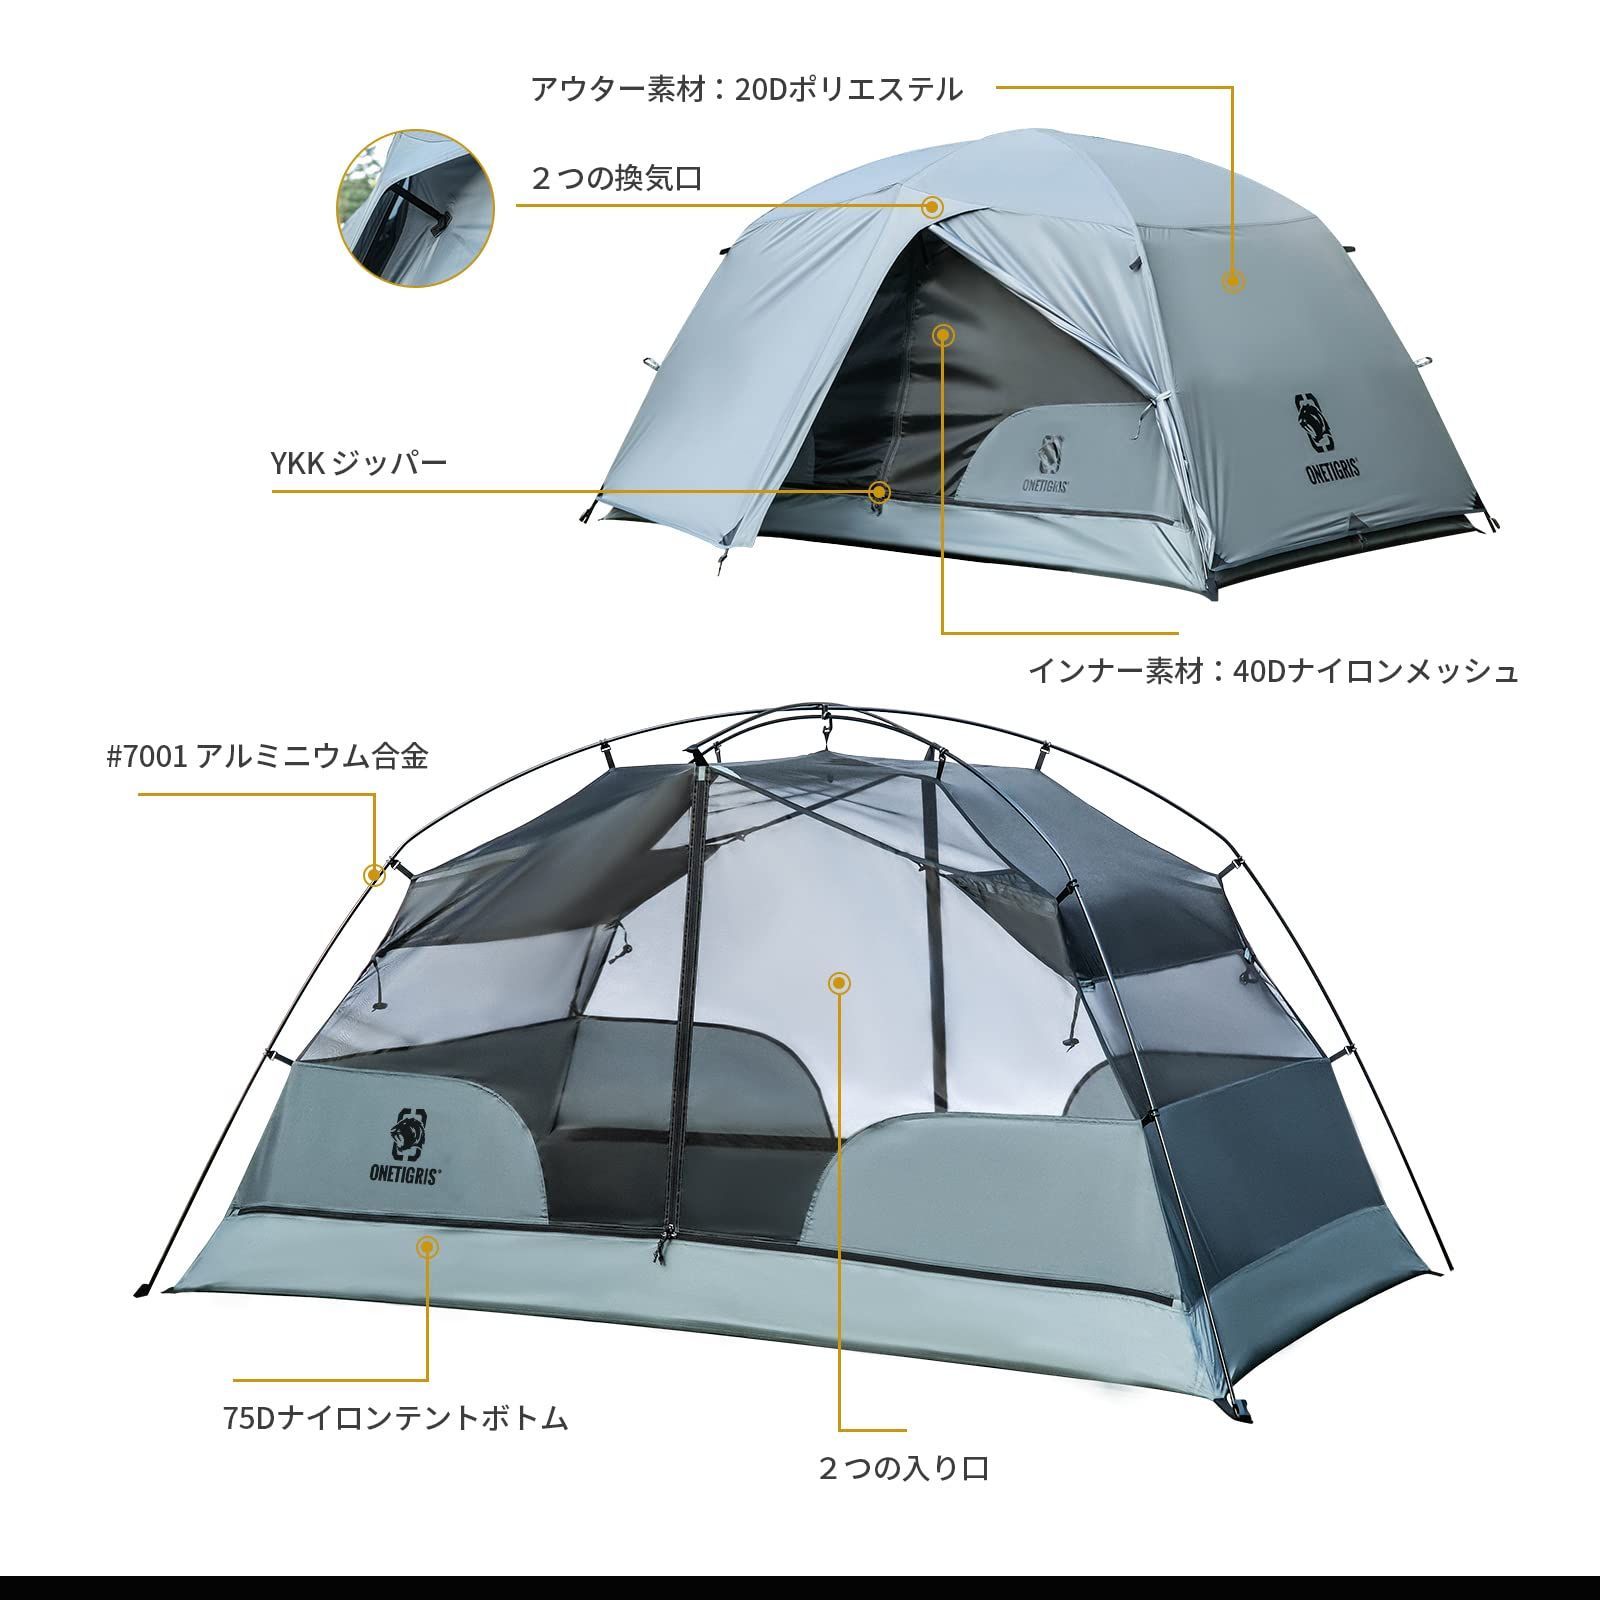 OneTigris COSMITTOテント ツーリングテント 1-2人用 ソロテント 設営簡単 バックパッキングテント ツーリングドームコンパクト  軽量 防風防水 収納バッグ付き - メルカリ